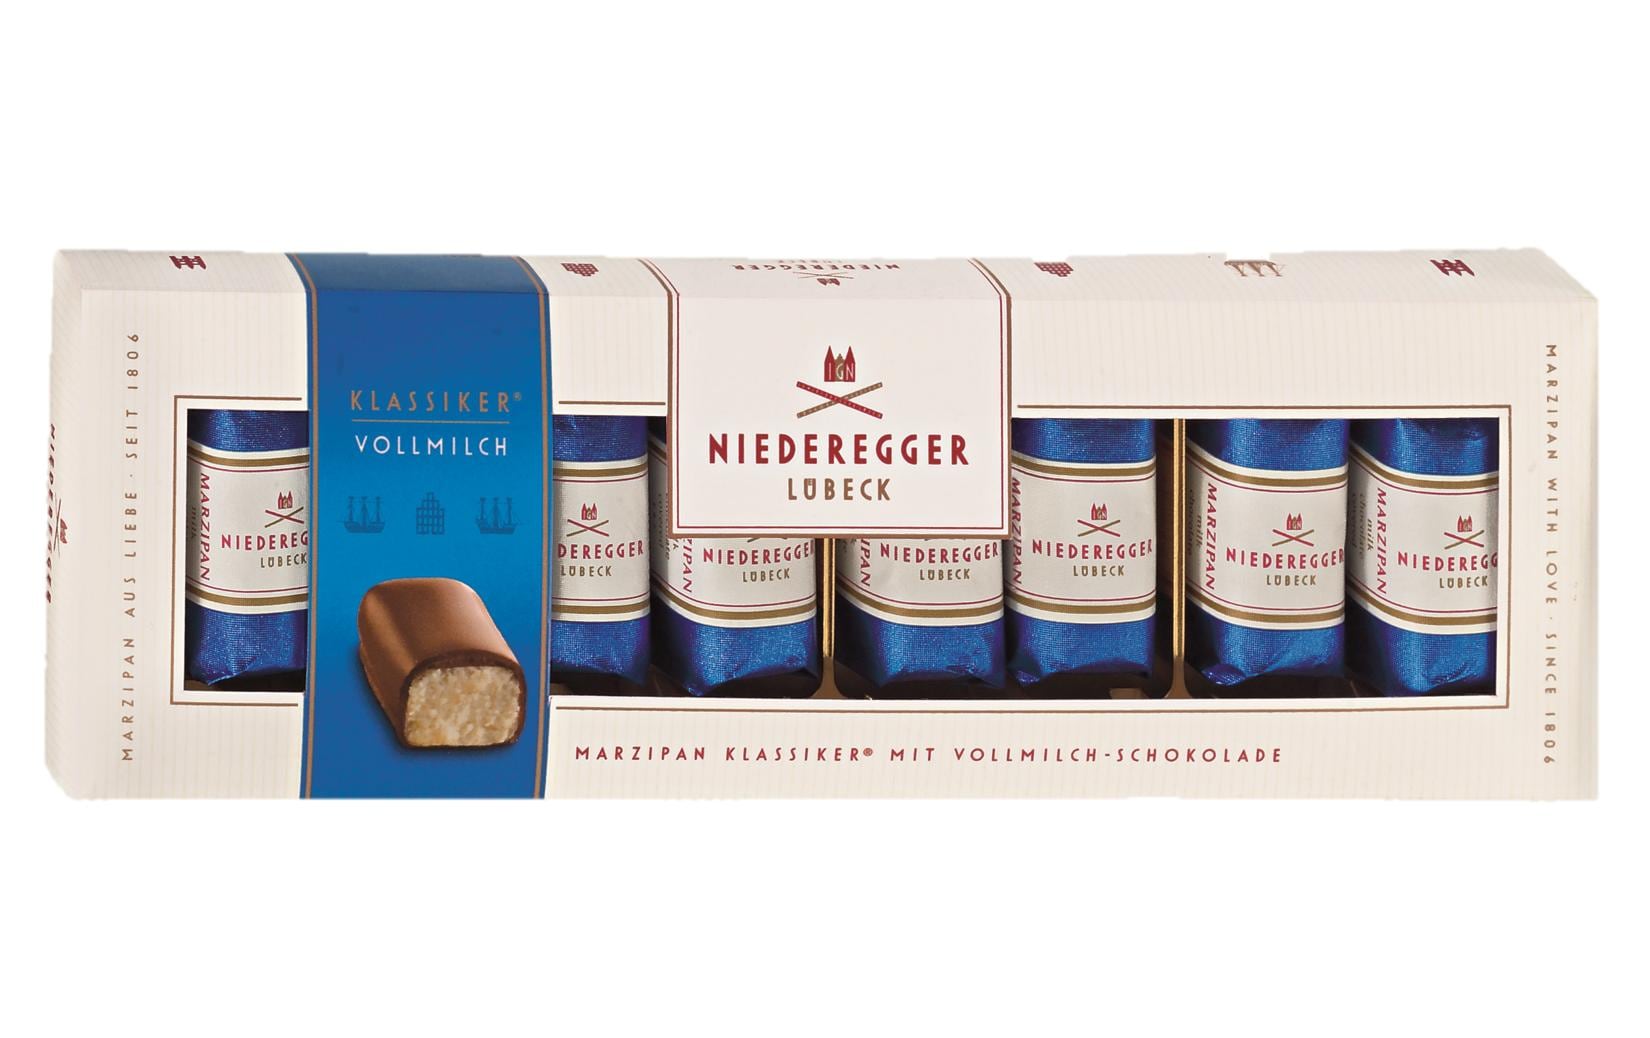 Niederegger Marzipan Klassiker-Pralinen mit Vollmilch Schokolade 100 g